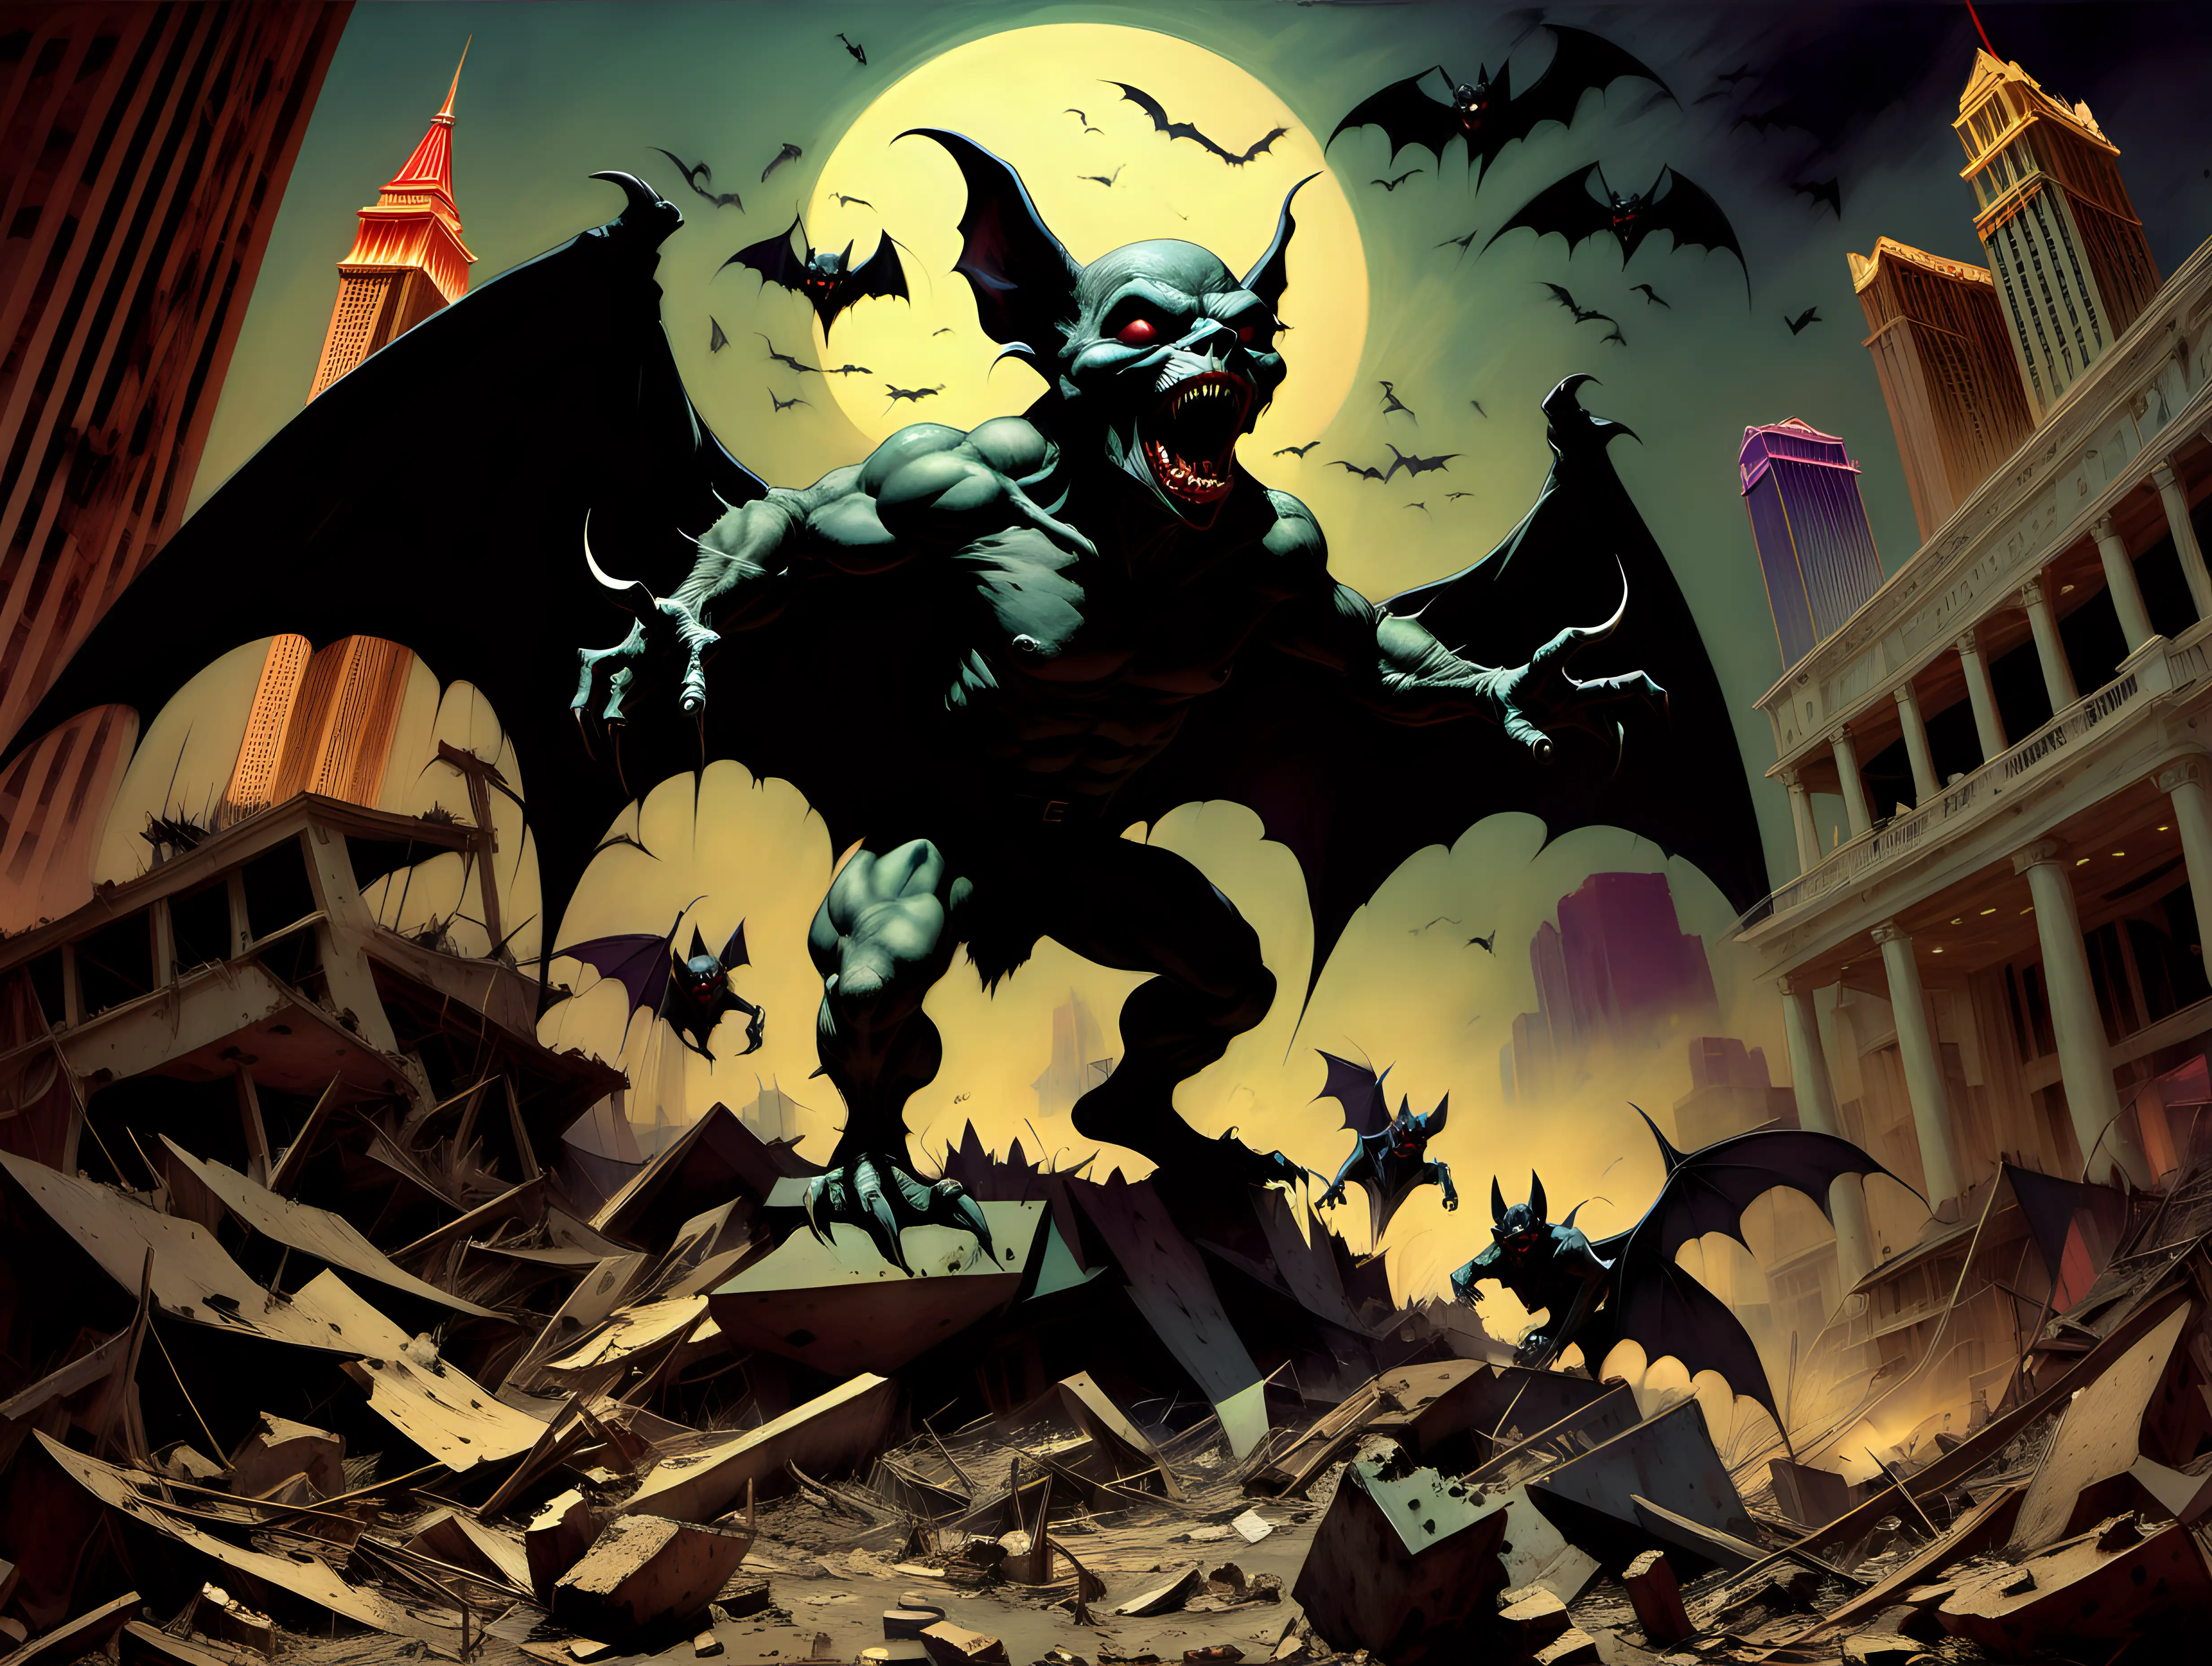 Dystopian Las Vegas Ruins Vampire Bat Invasion Frank Frazetta Style